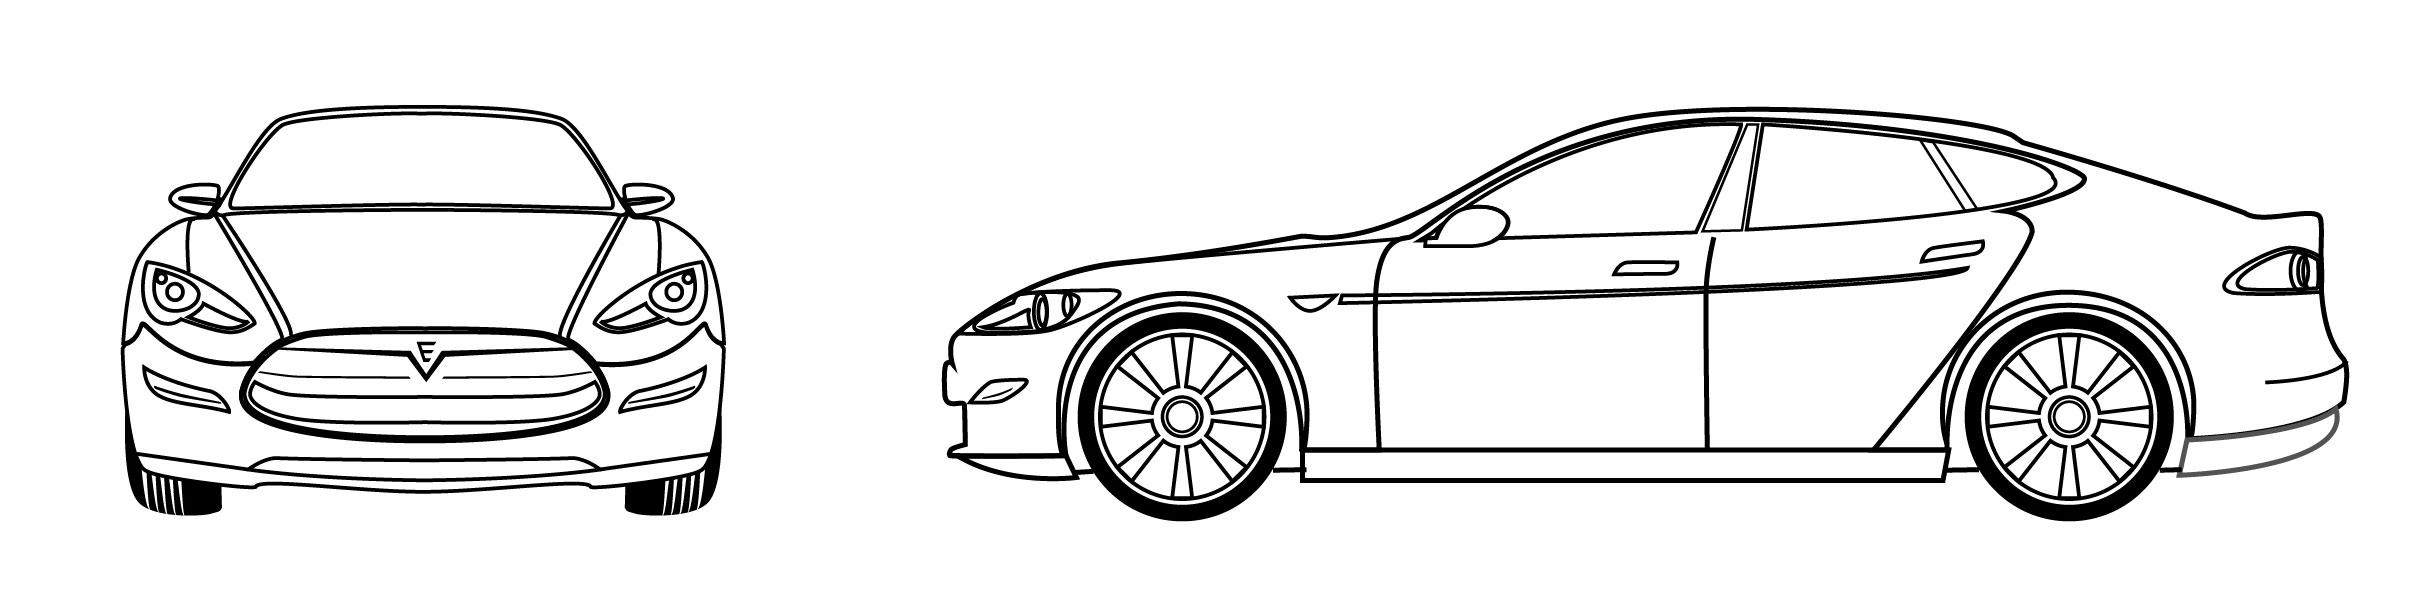 tesla-car-illustration